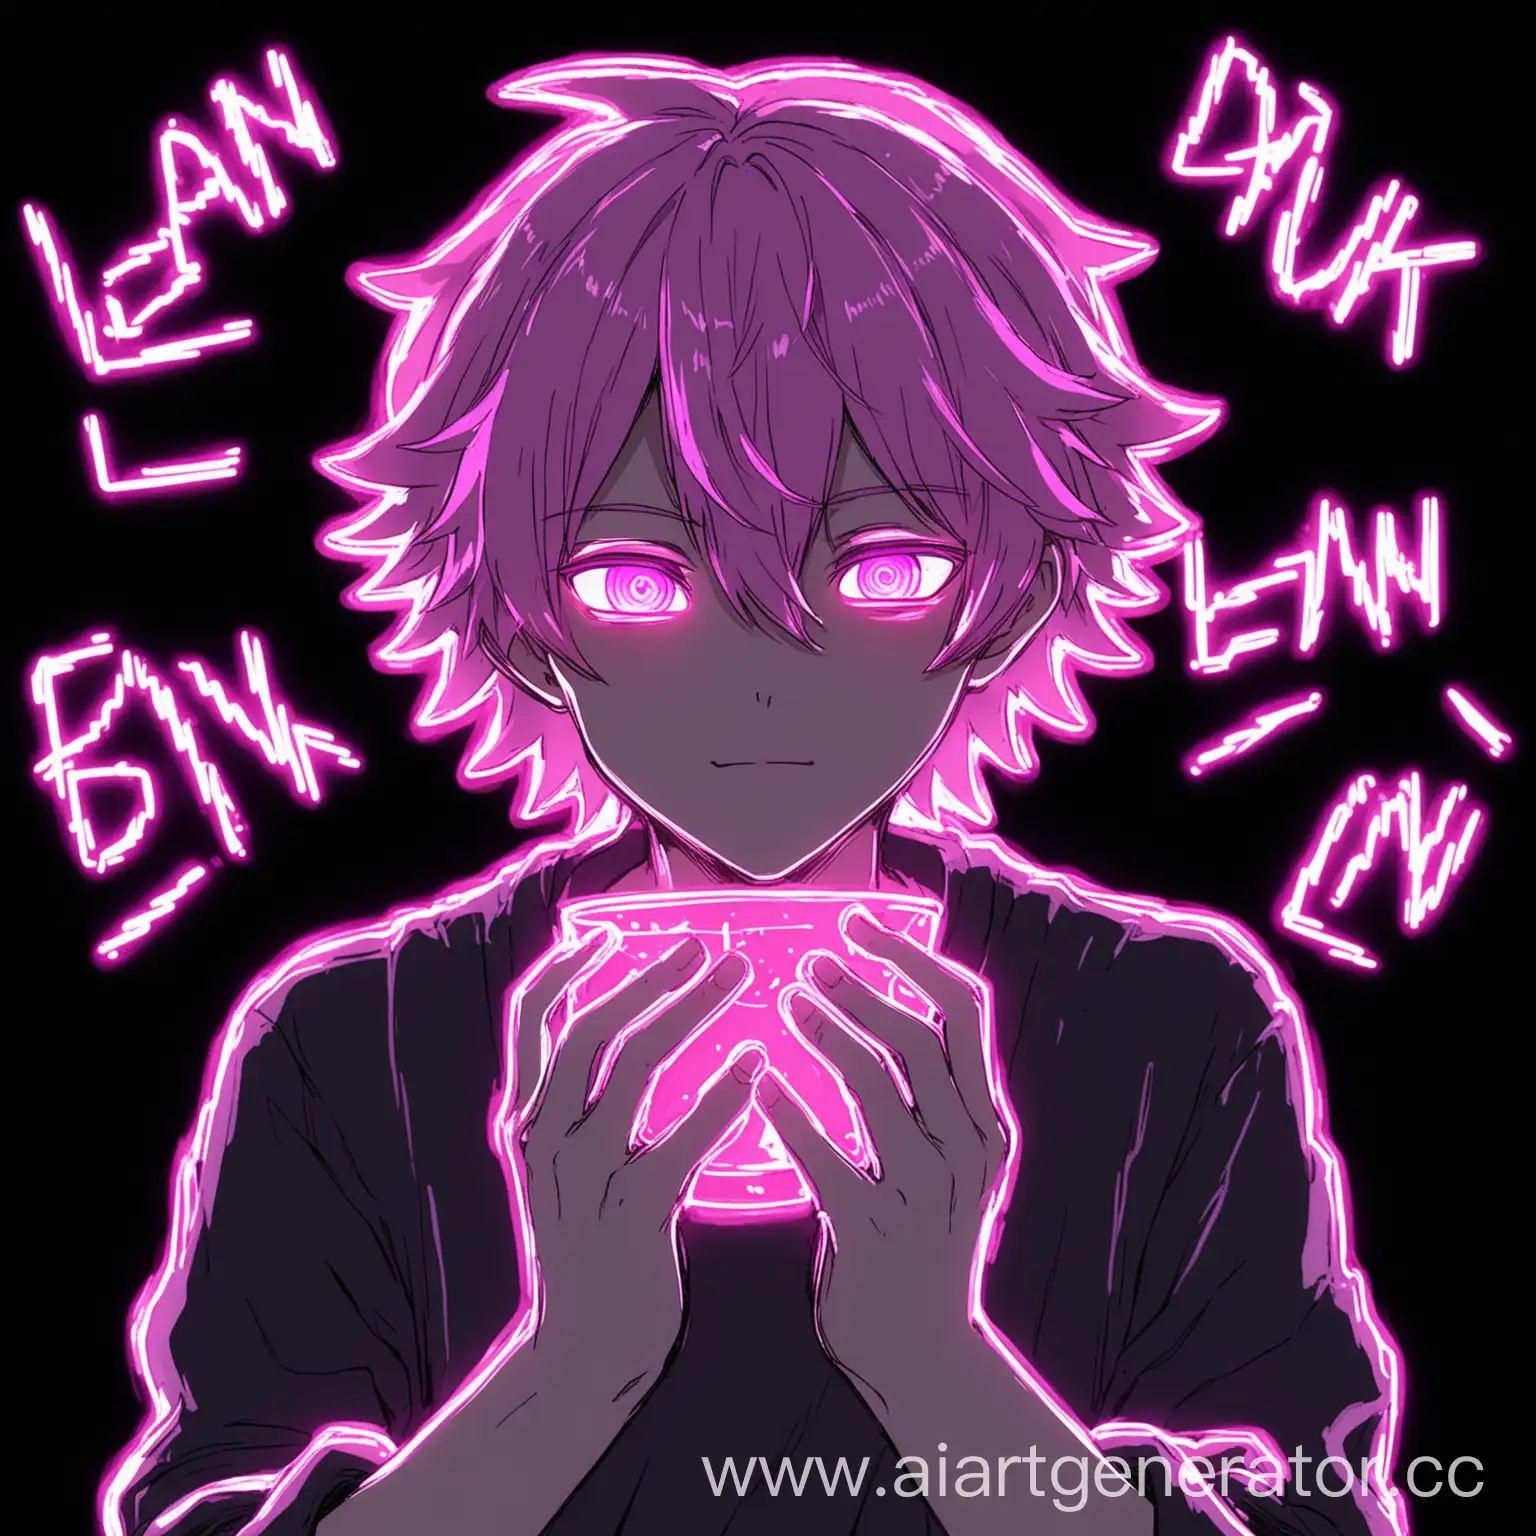 Anime-Boy-with-PinkPurple-Hair-Holding-Purple-Drunk-Lean-on-Black-Background